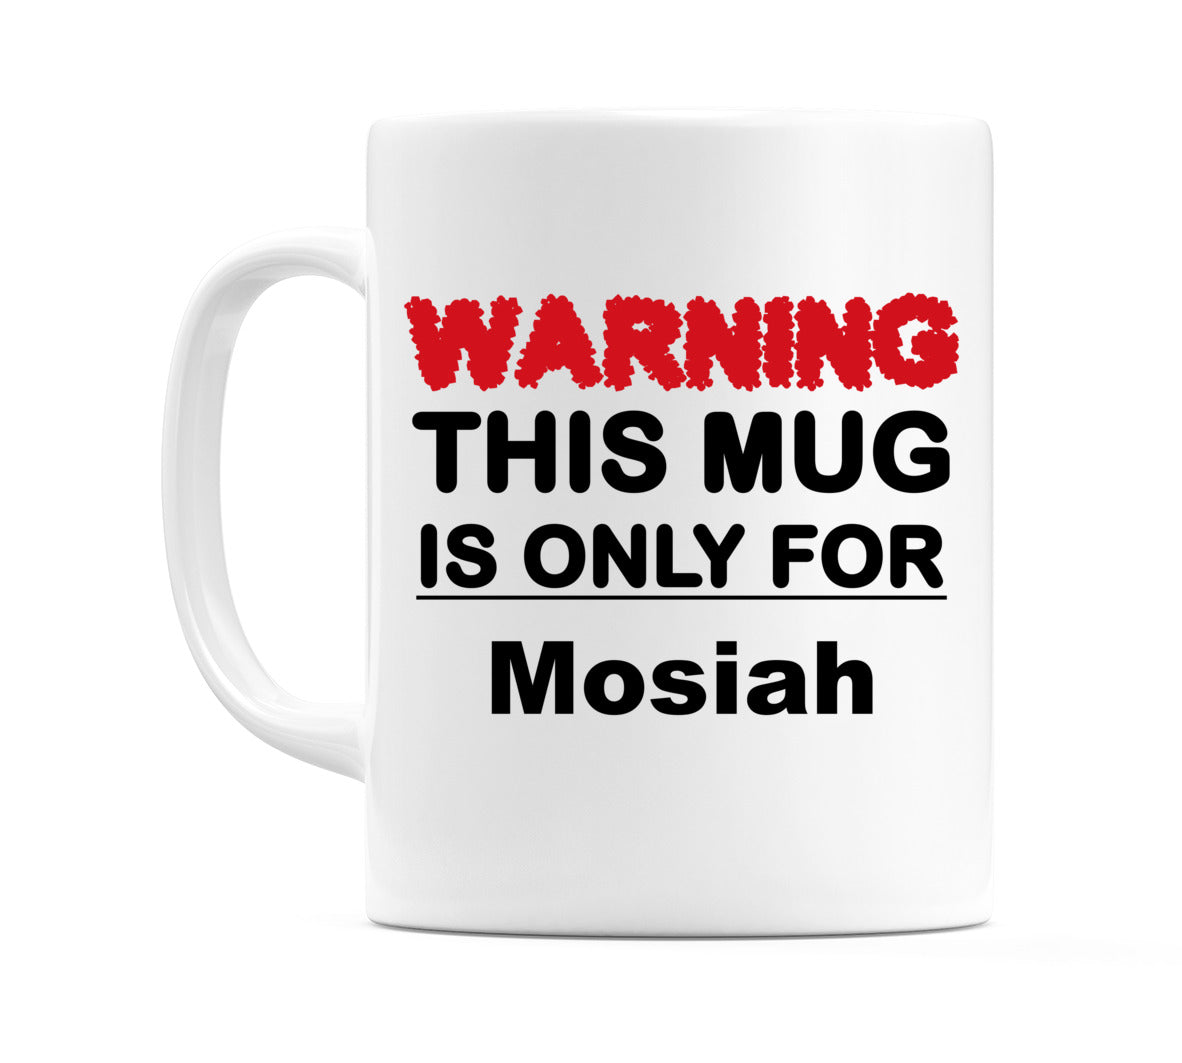 Warning This Mug is ONLY for Mosiah Mug